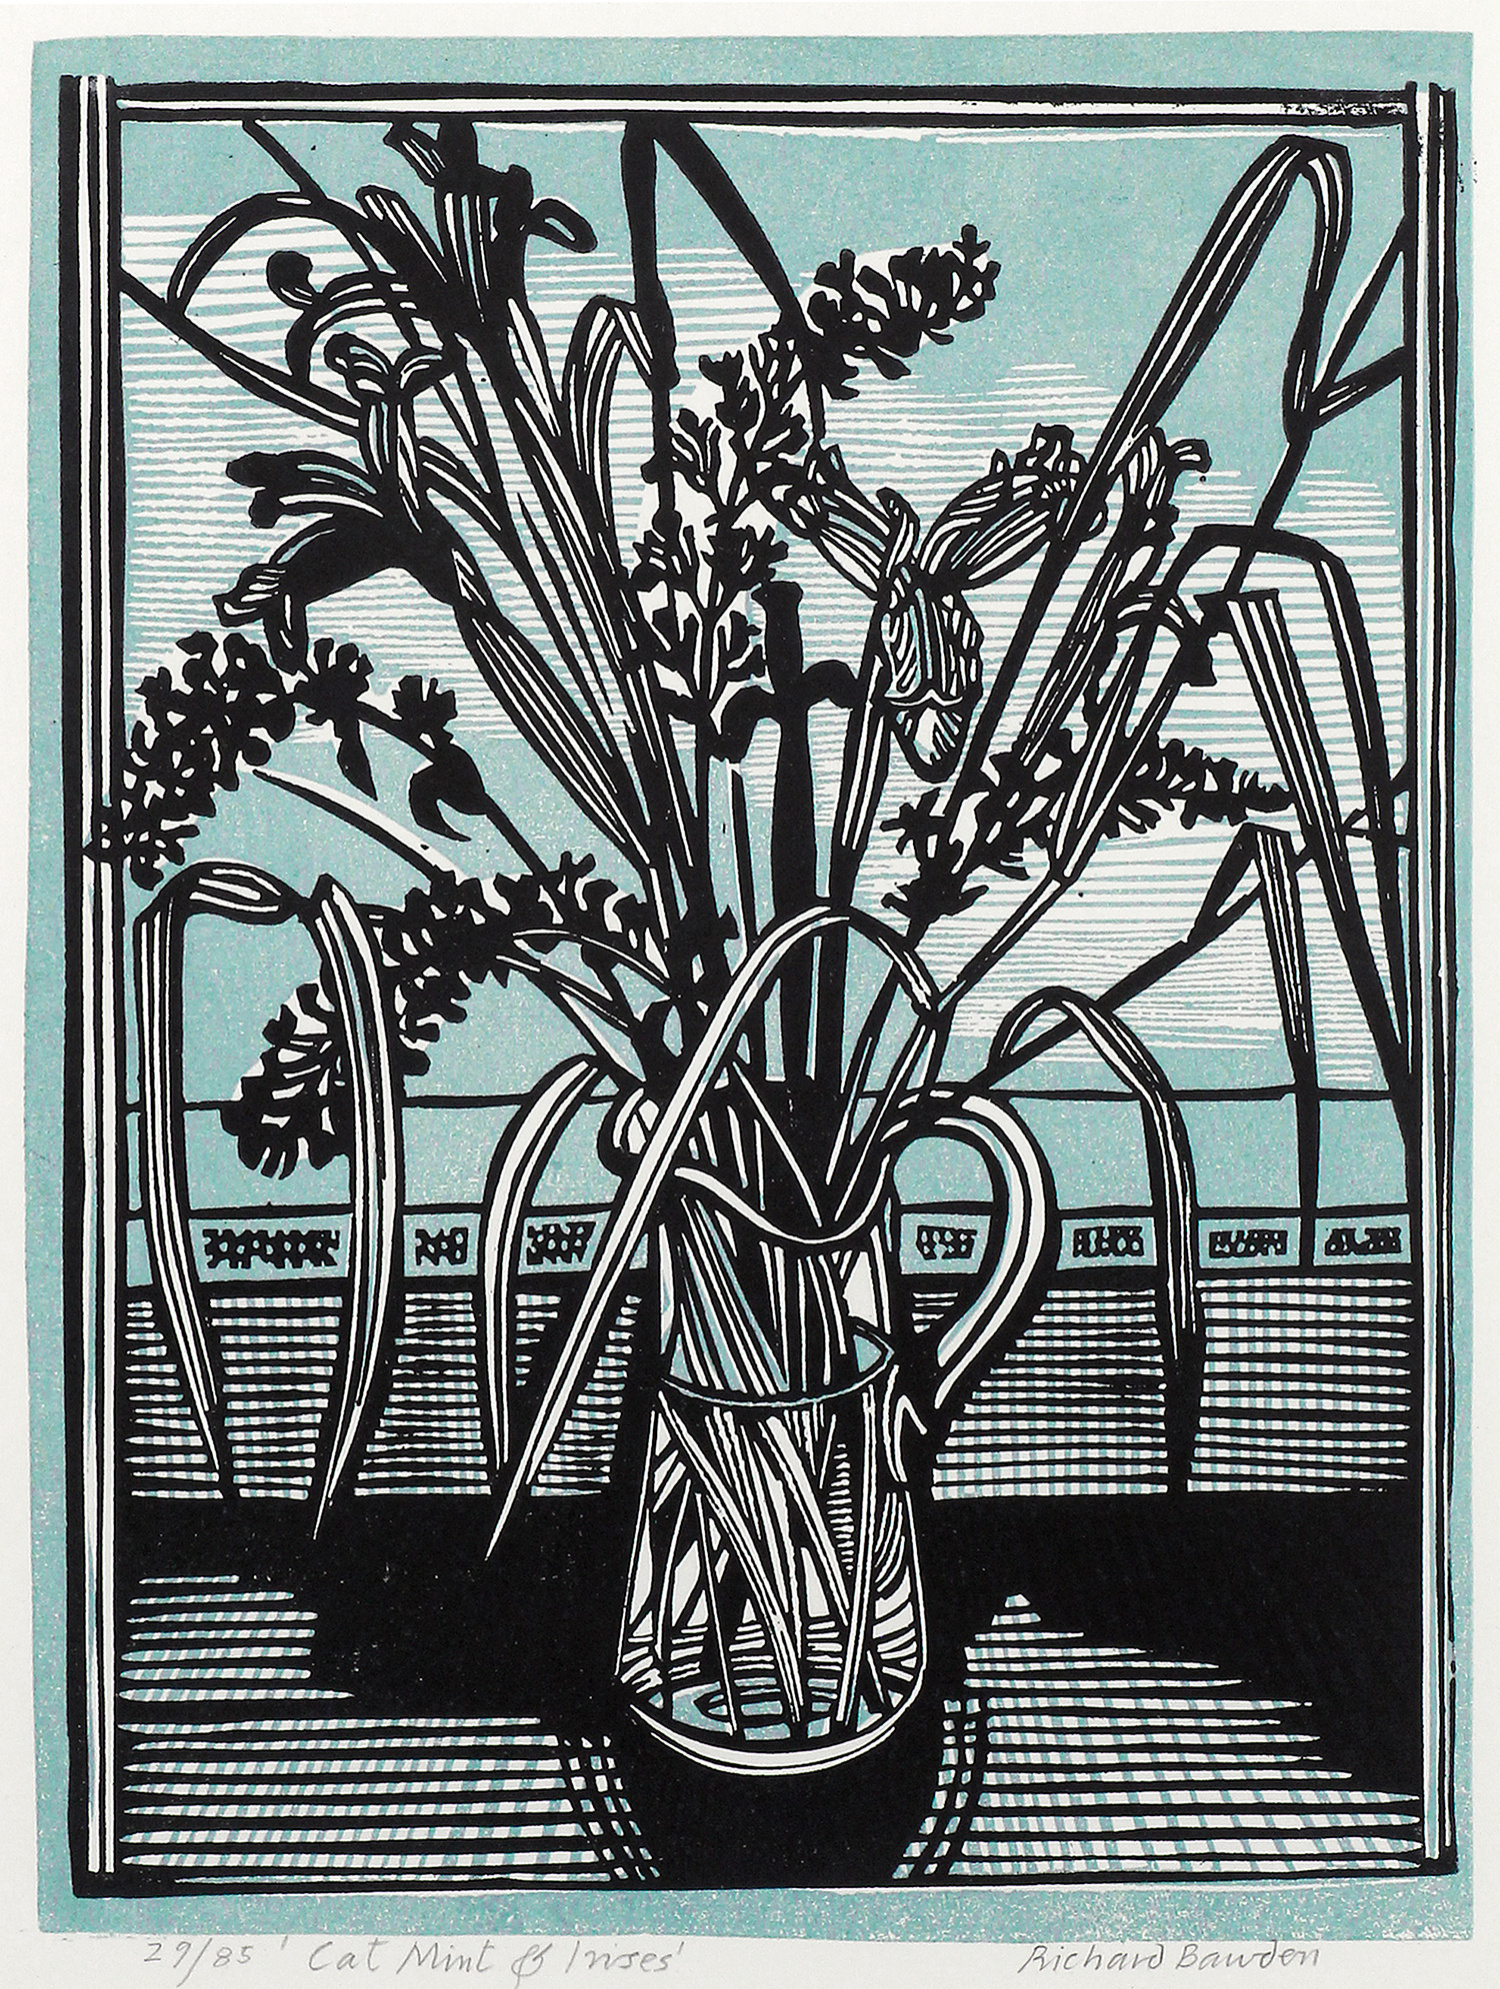 Catmint & Irises by Richard Bawden